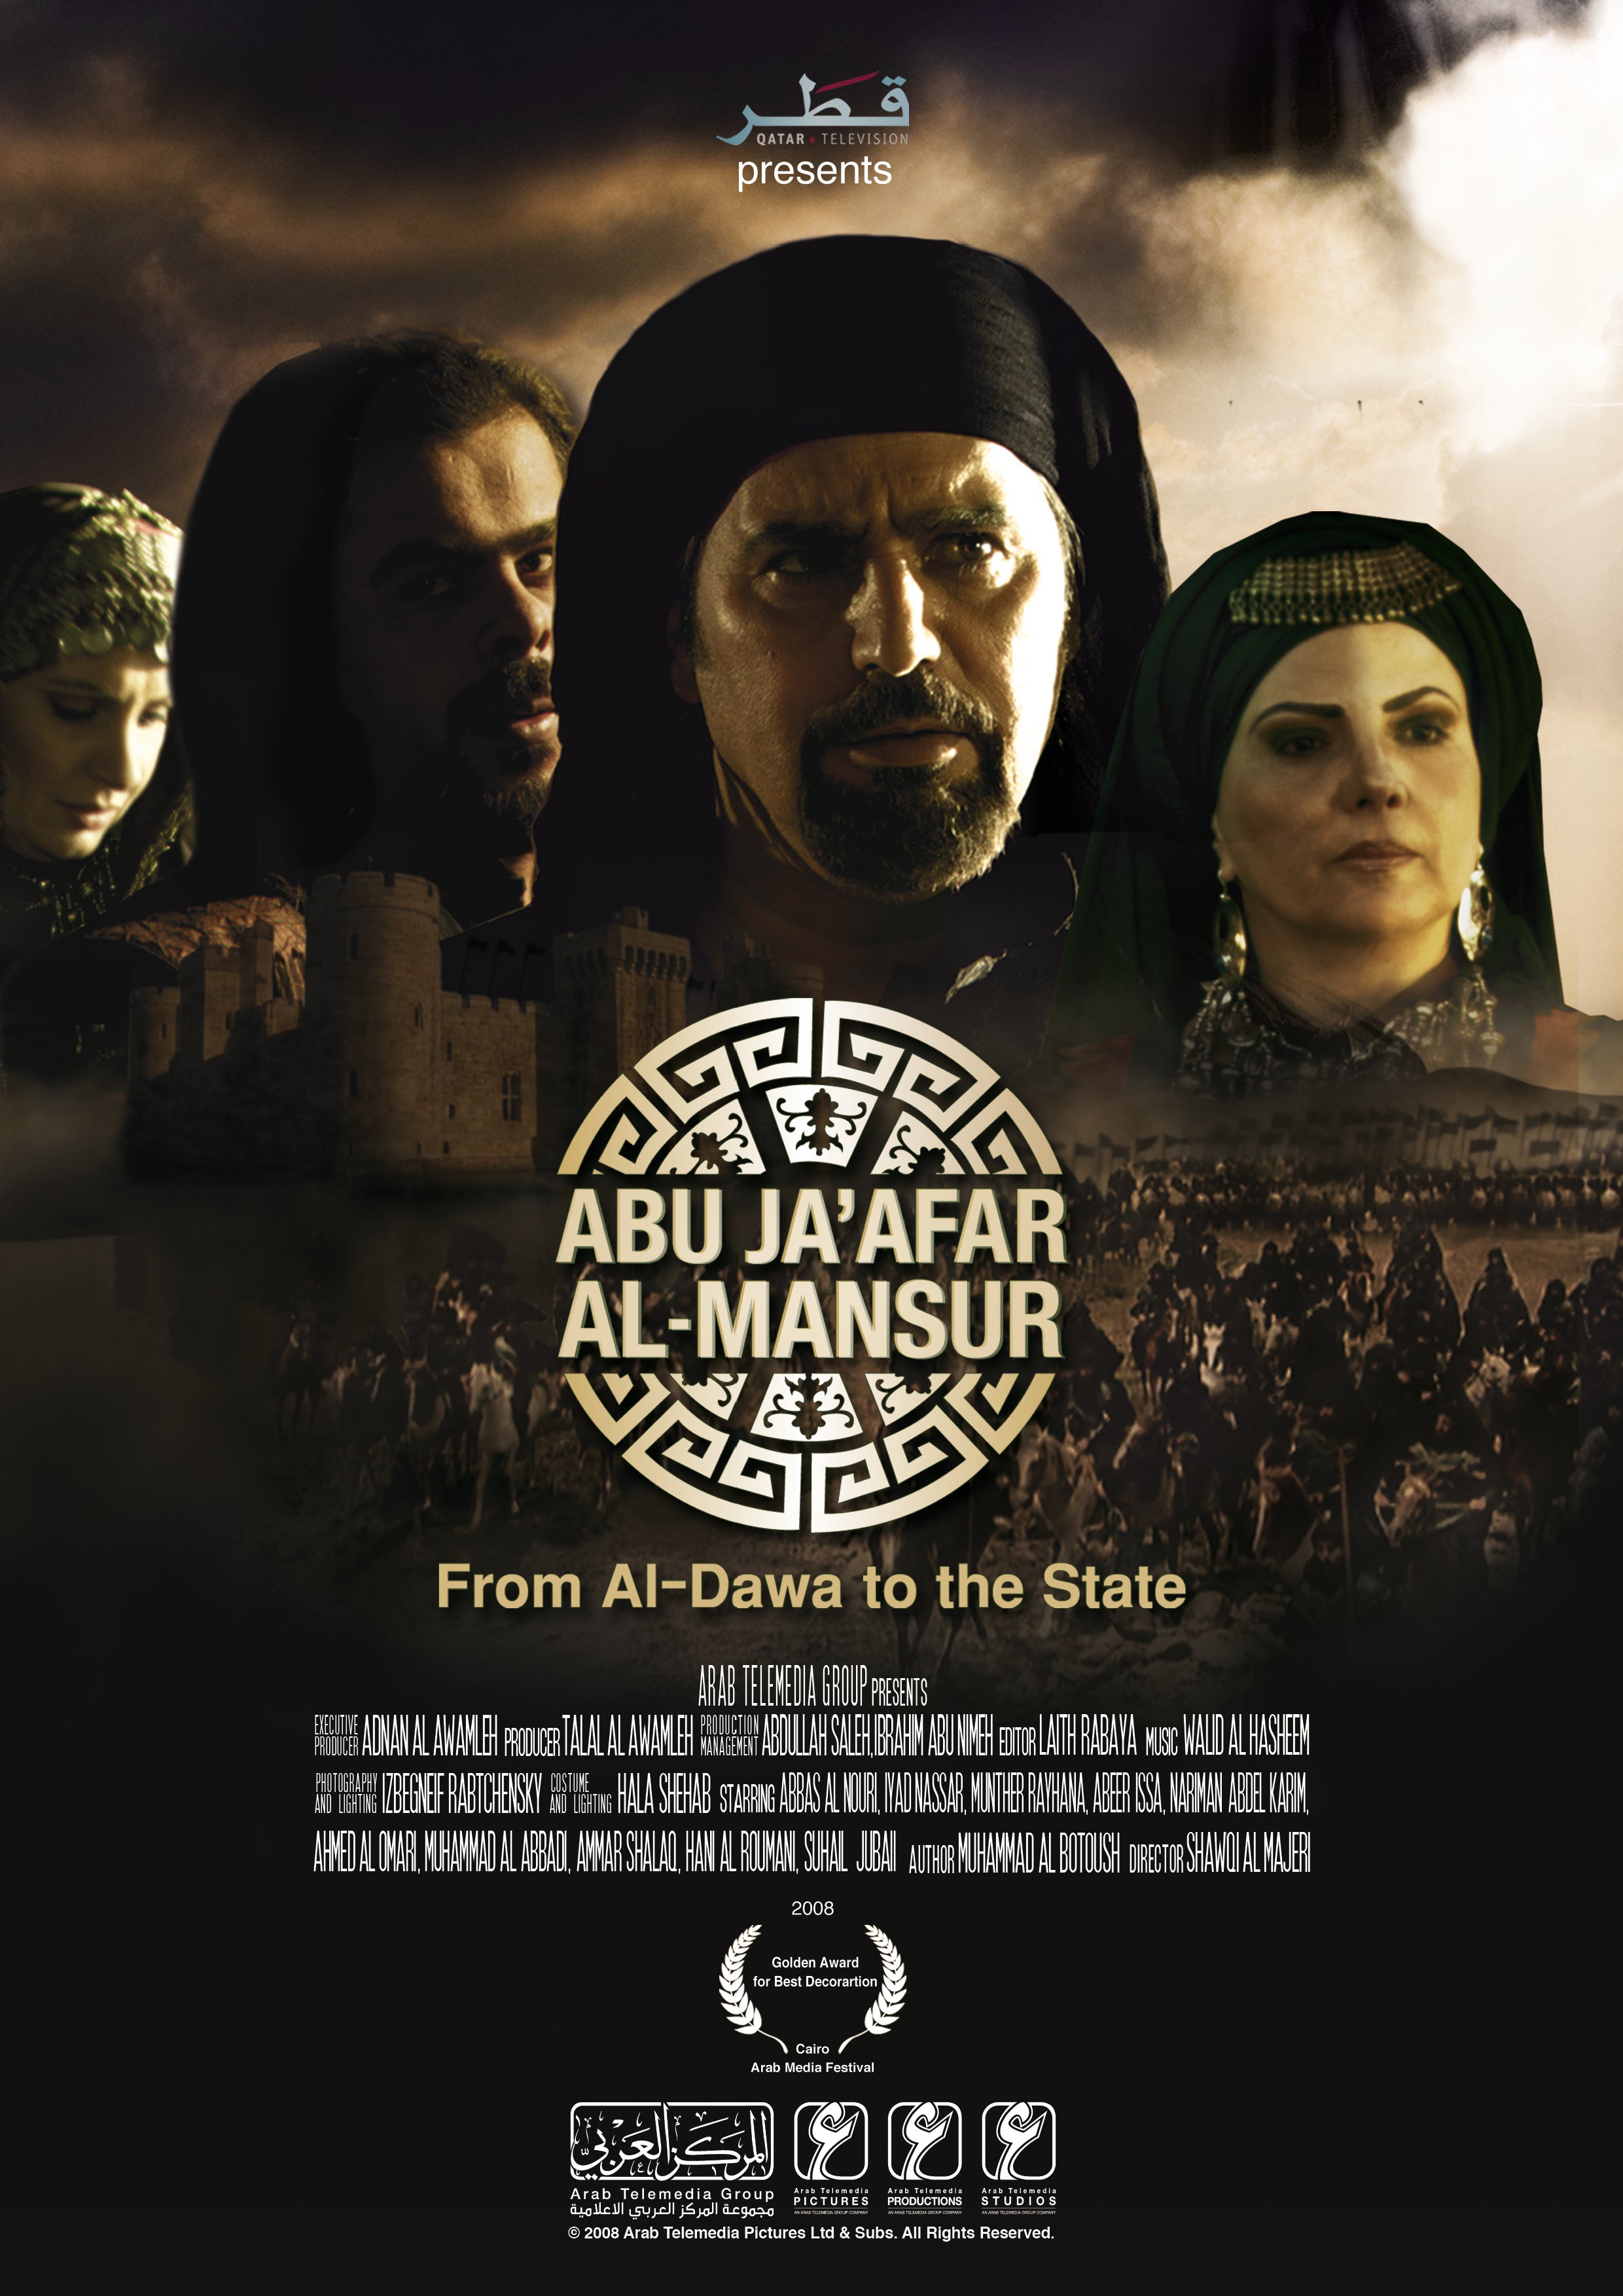 TV ratings for Abu Ja'afar Al-Mansur (أبو جعفر المنصور) in Japan. MBC 1 TV series